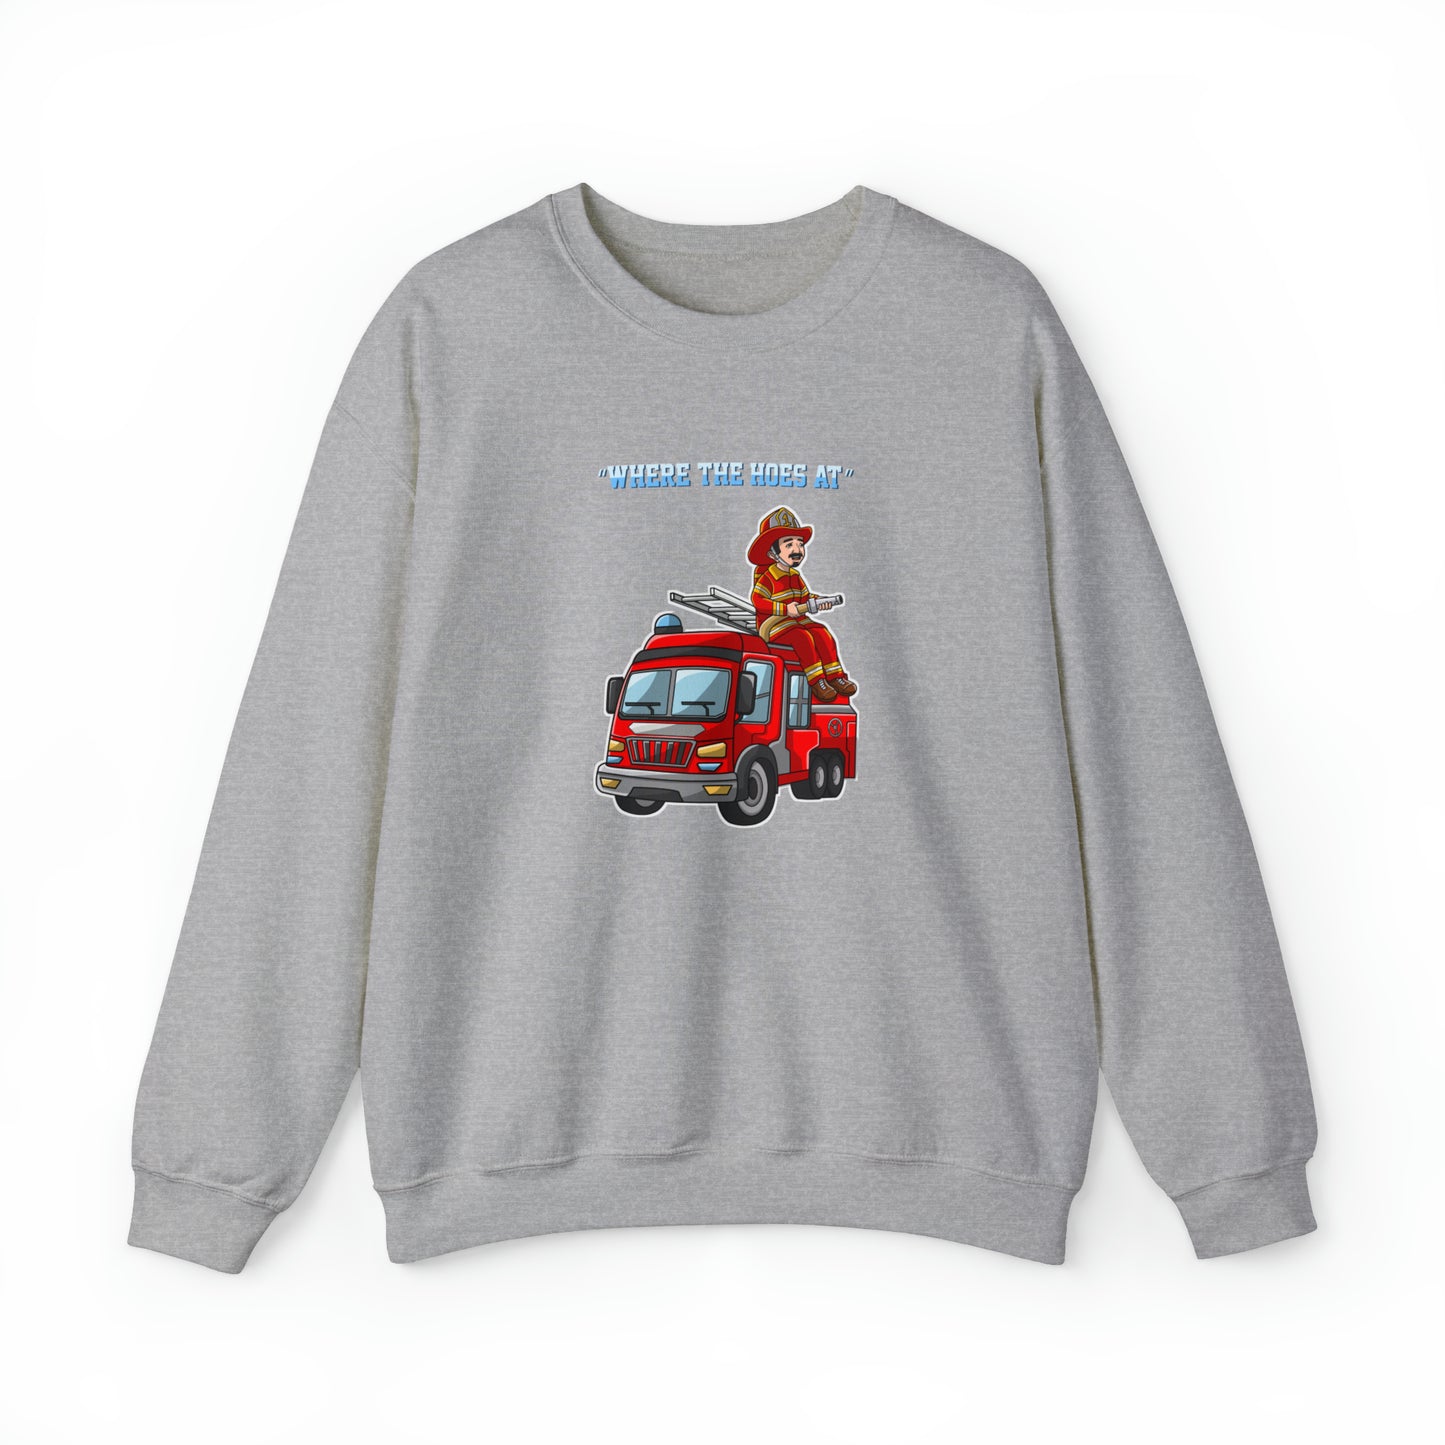 Custom Parody Crewneck Sweatshirt, Where the Hoes at Design